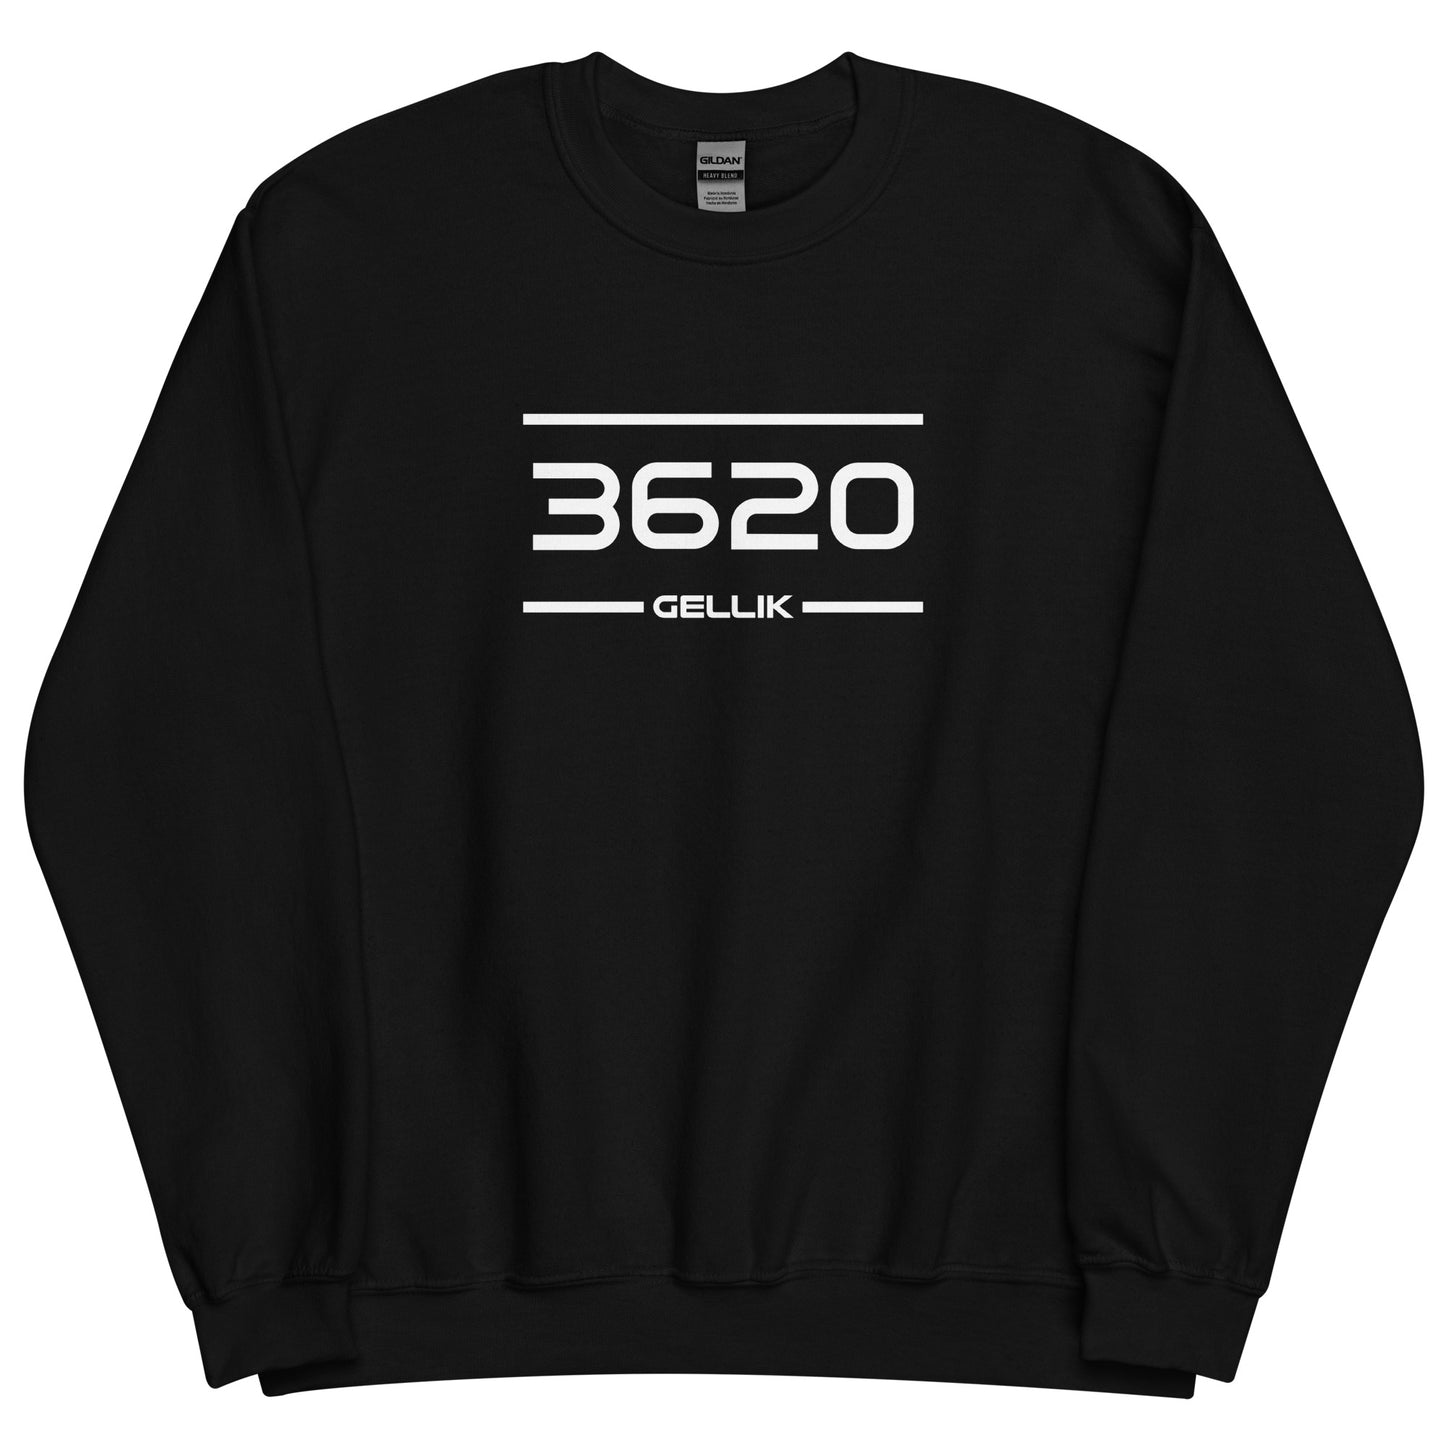 Sweater - 3620 - Gellik (M/V)